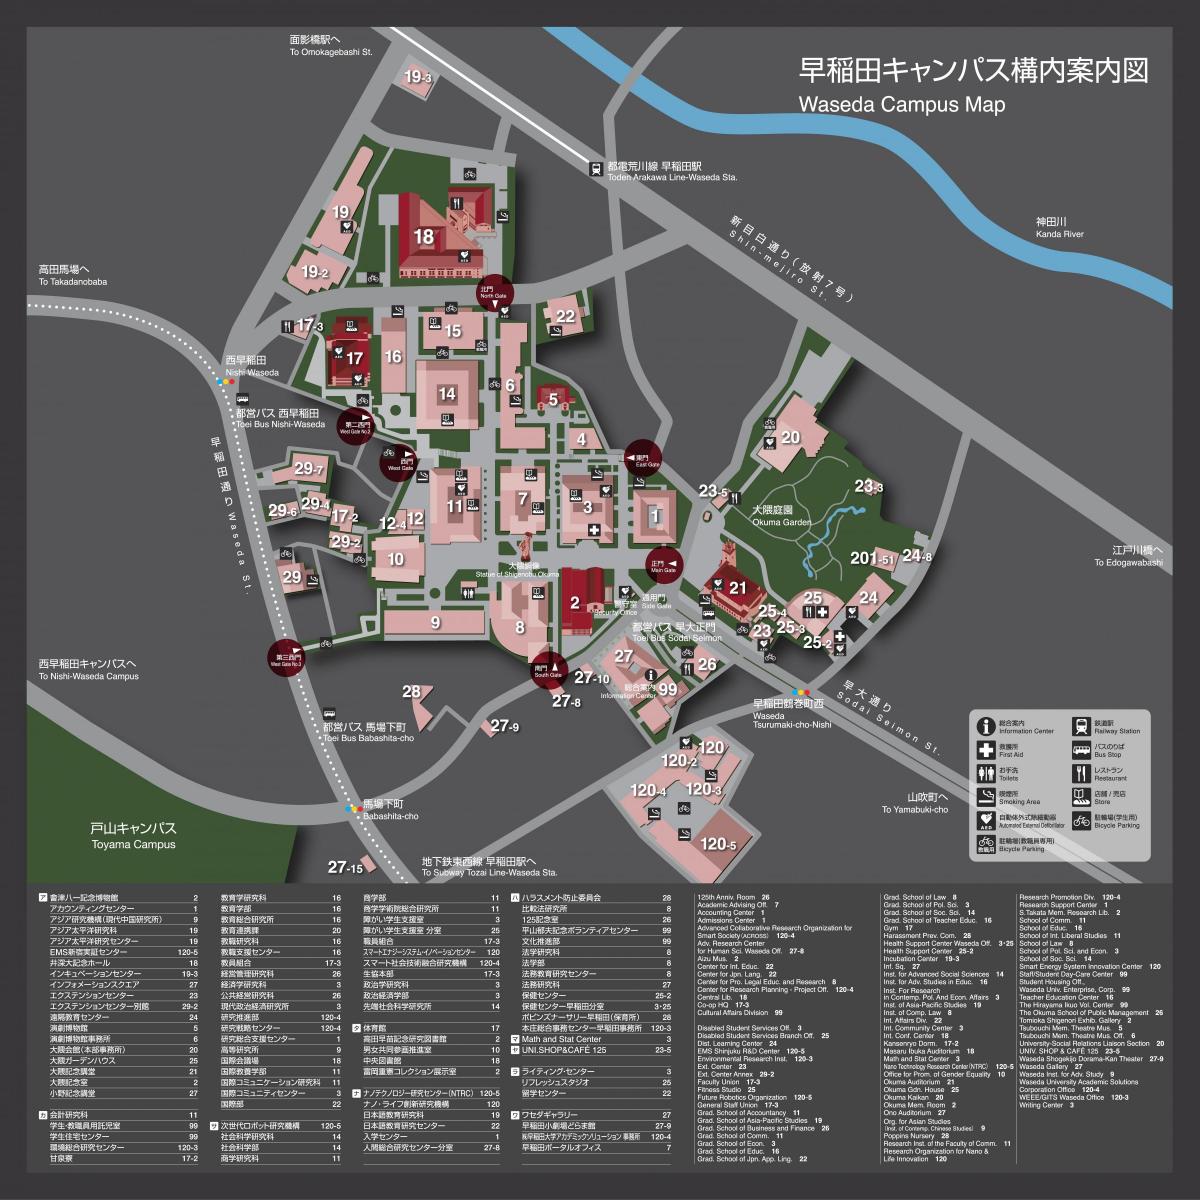 la waseda university campus mappa